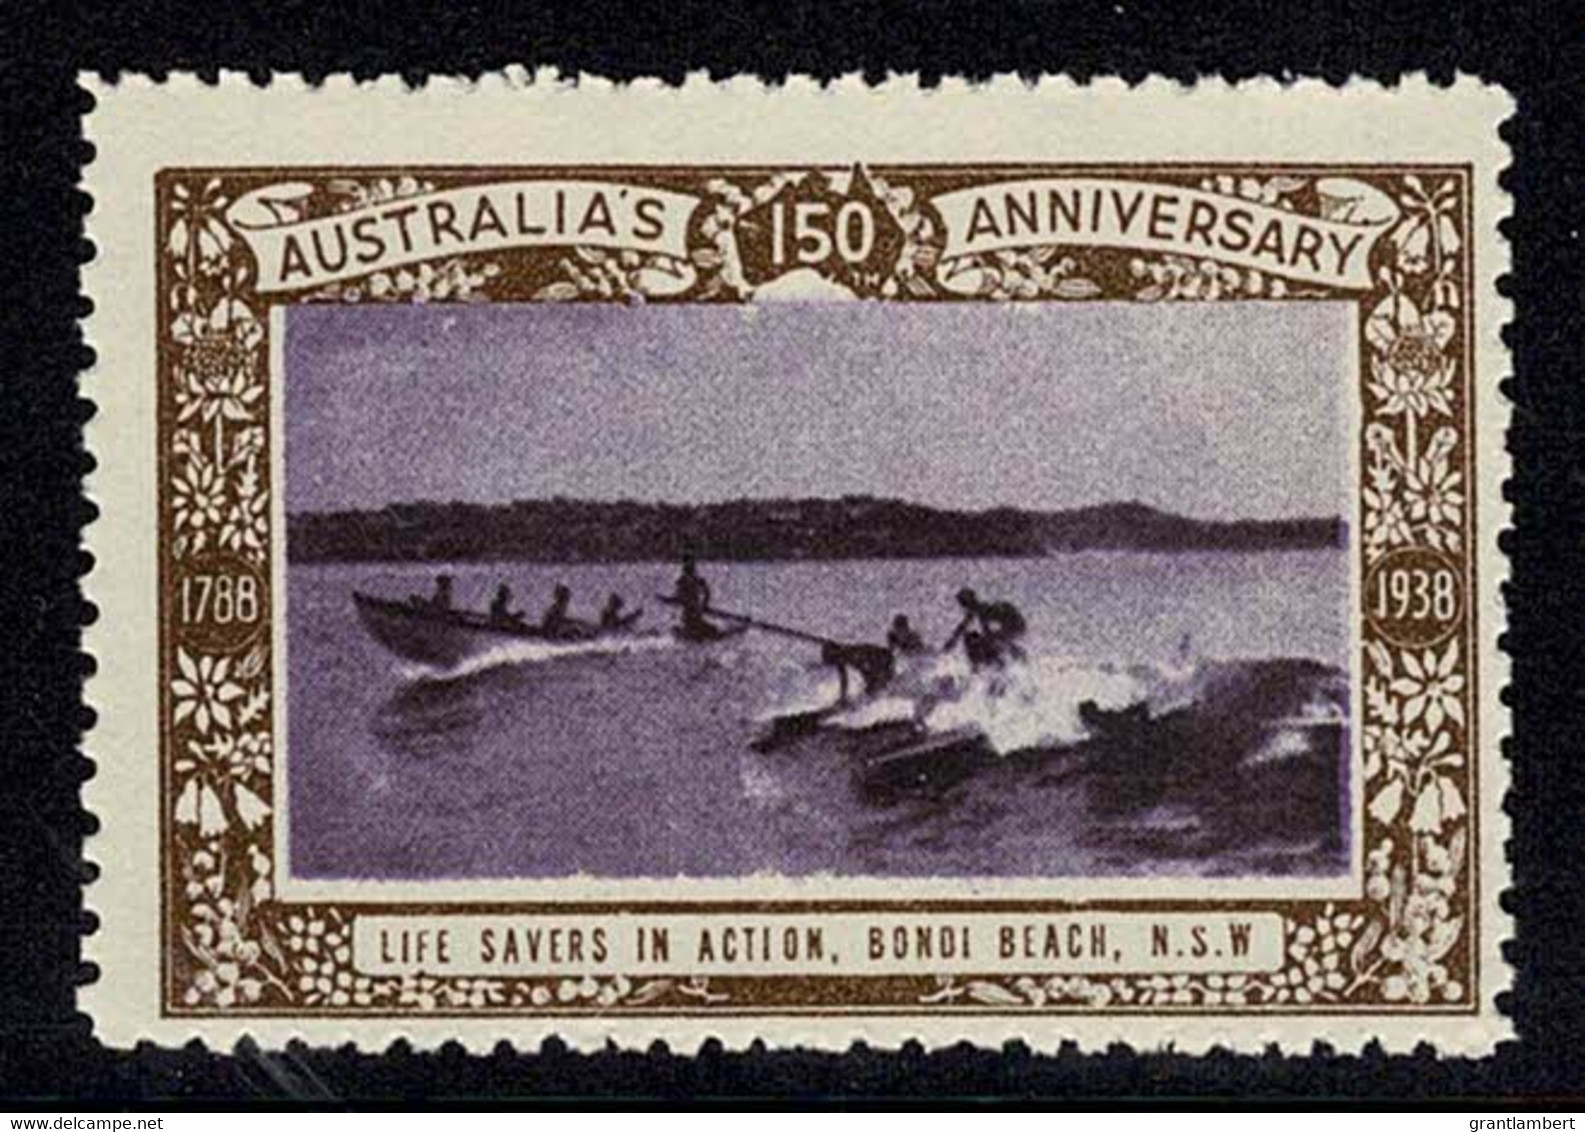 Australia 1938 Life Savers, Bondi Beach - NSW 150th Anniversary Cinderella MNH - Cinderella